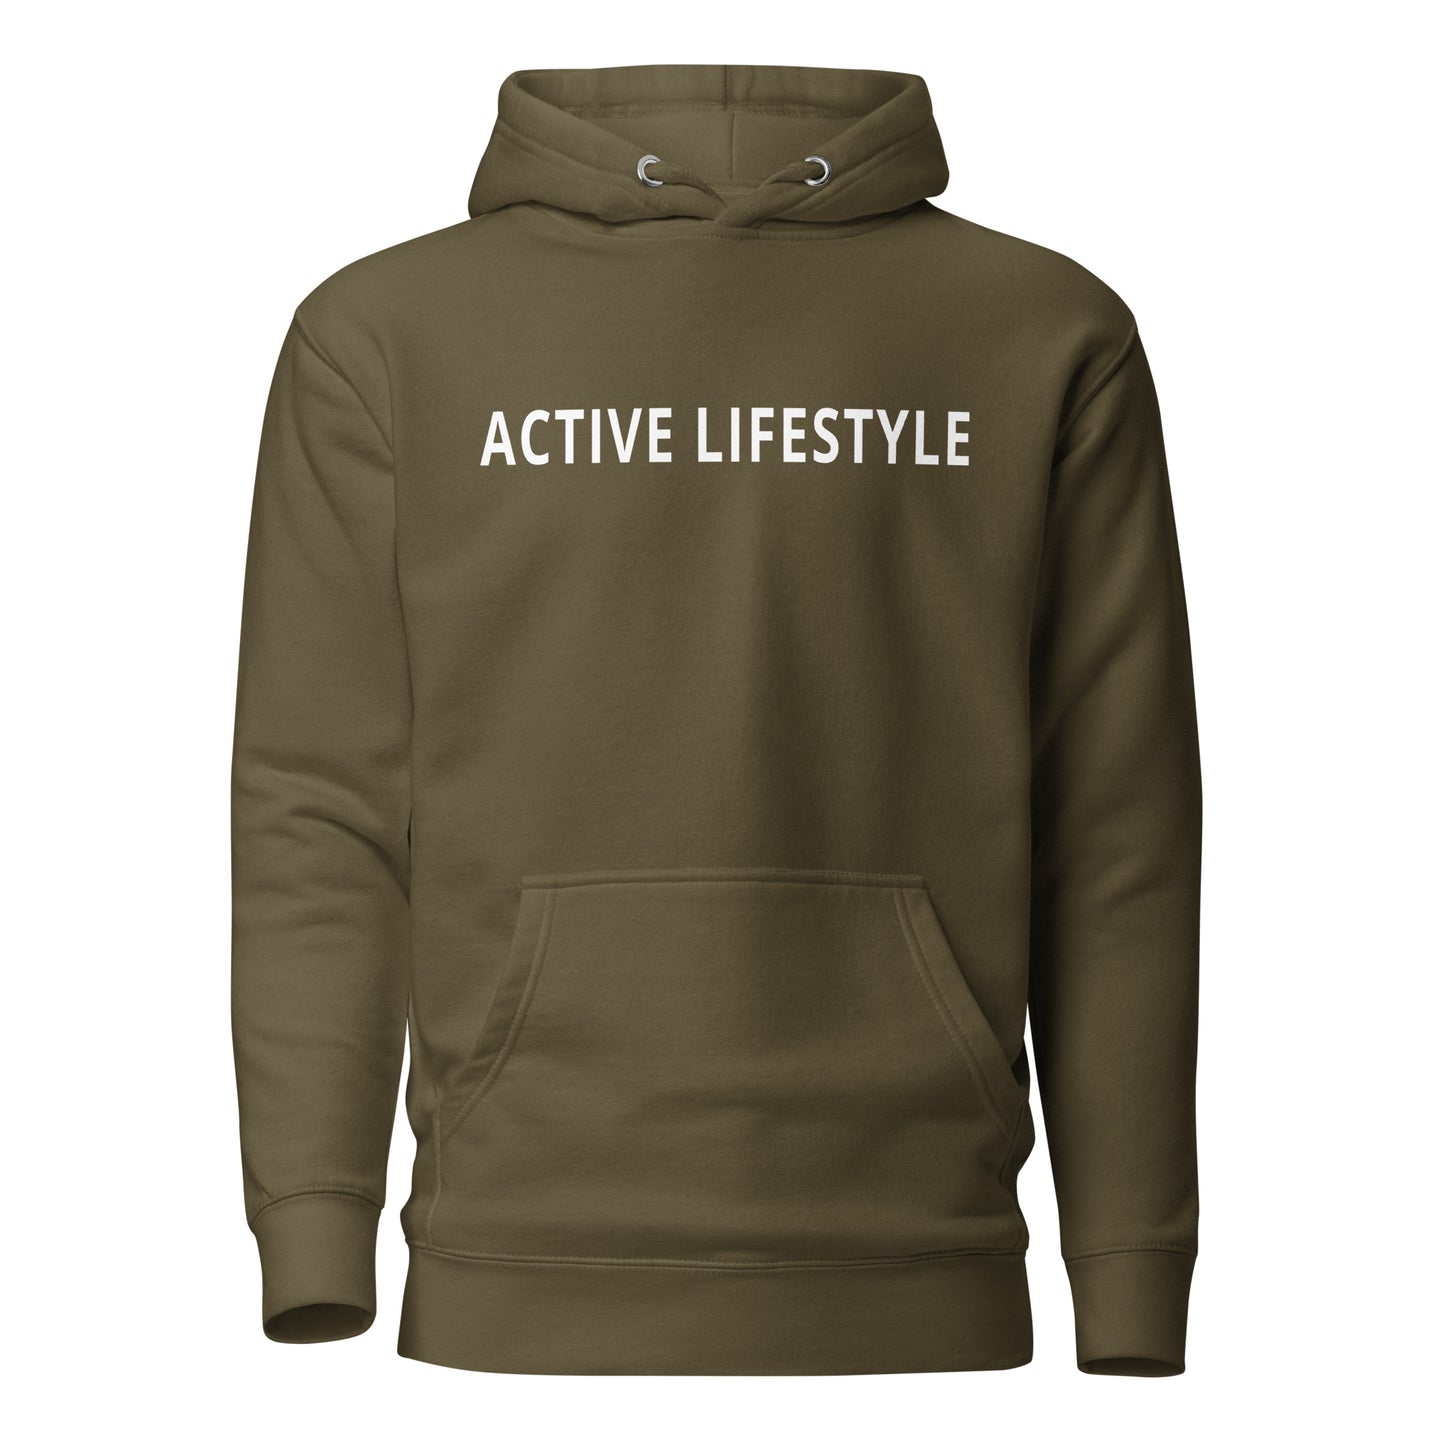 hoodies - hoodies for men - active - healthy - gym - workout - turtlepanda - graphic tees - tees - tshirts - shirts - unisex